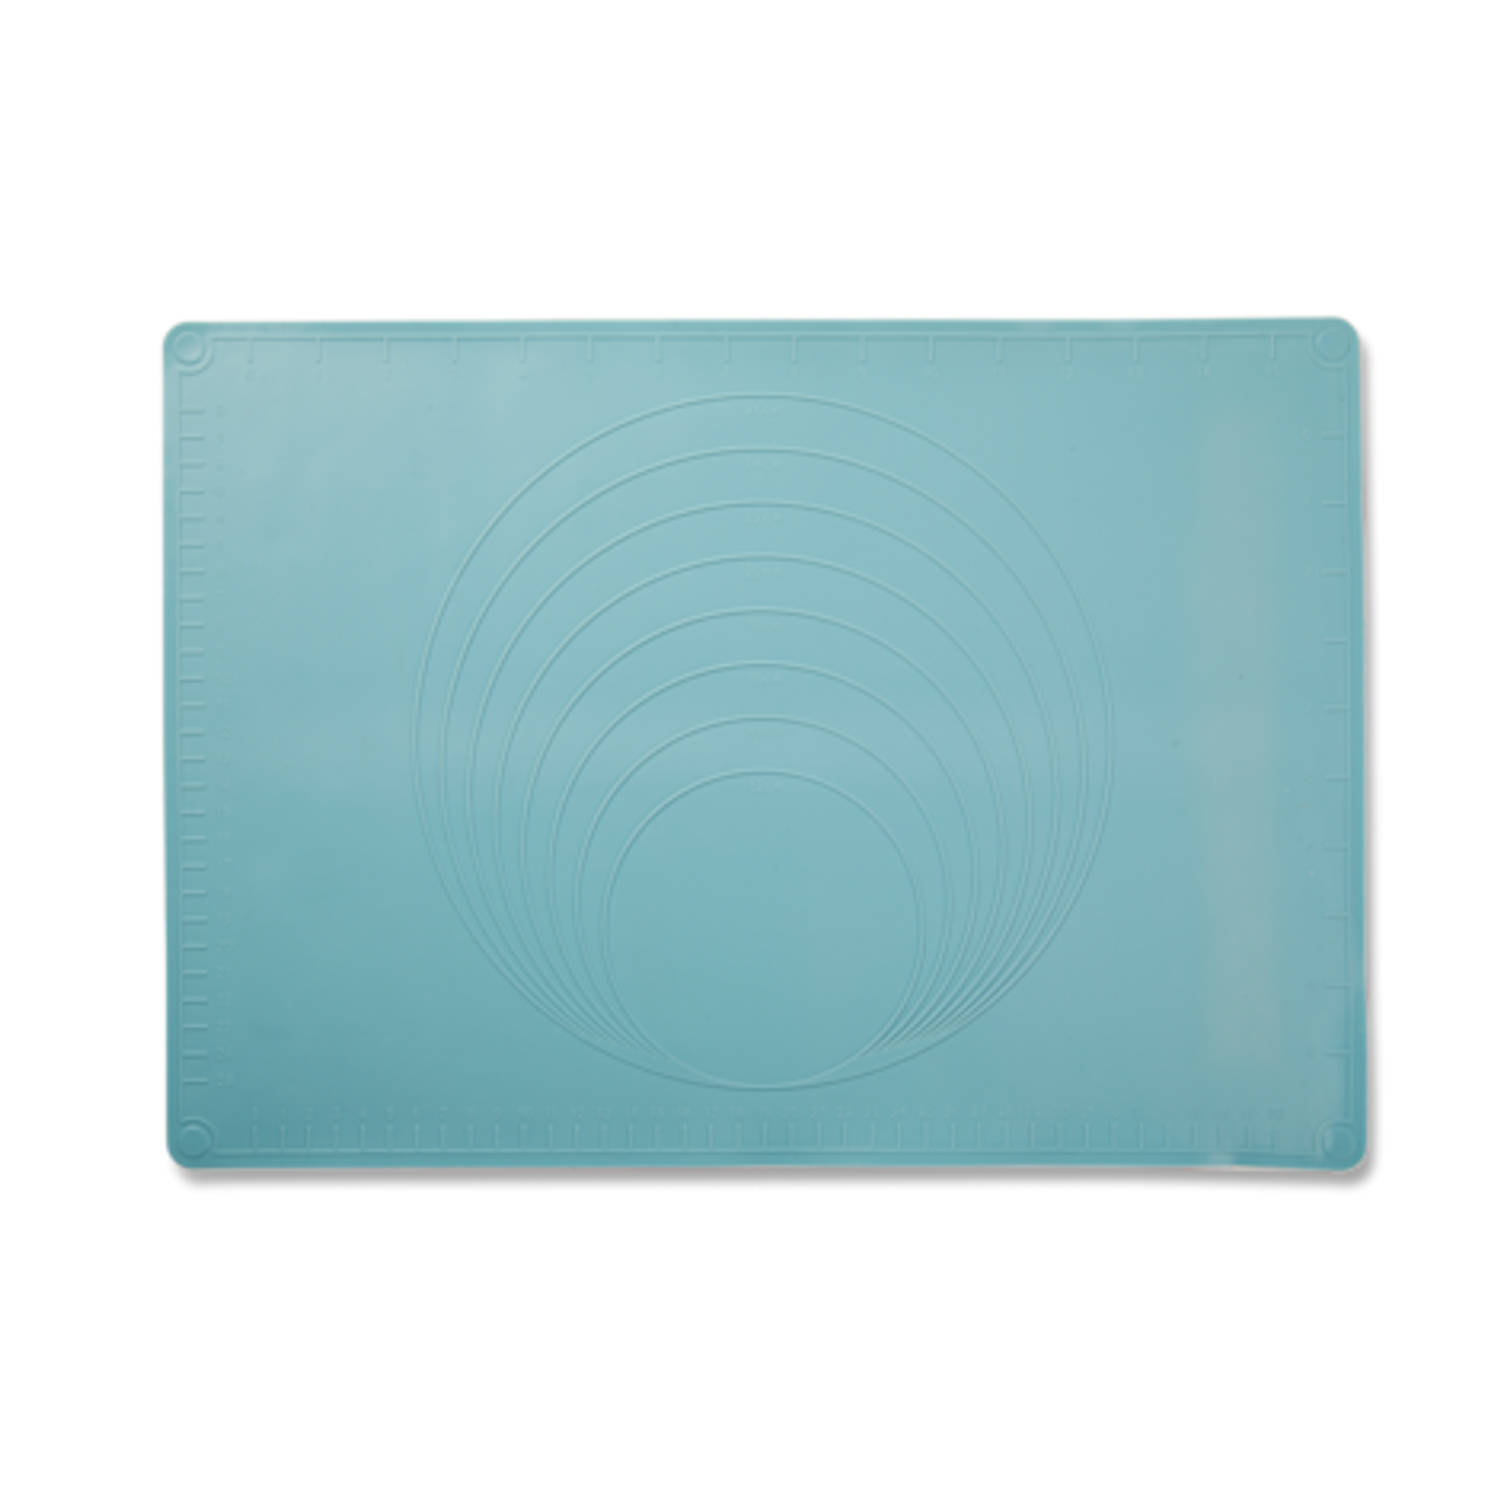 Blokker bakmat siliconen 44 5 x 31 cm blauw